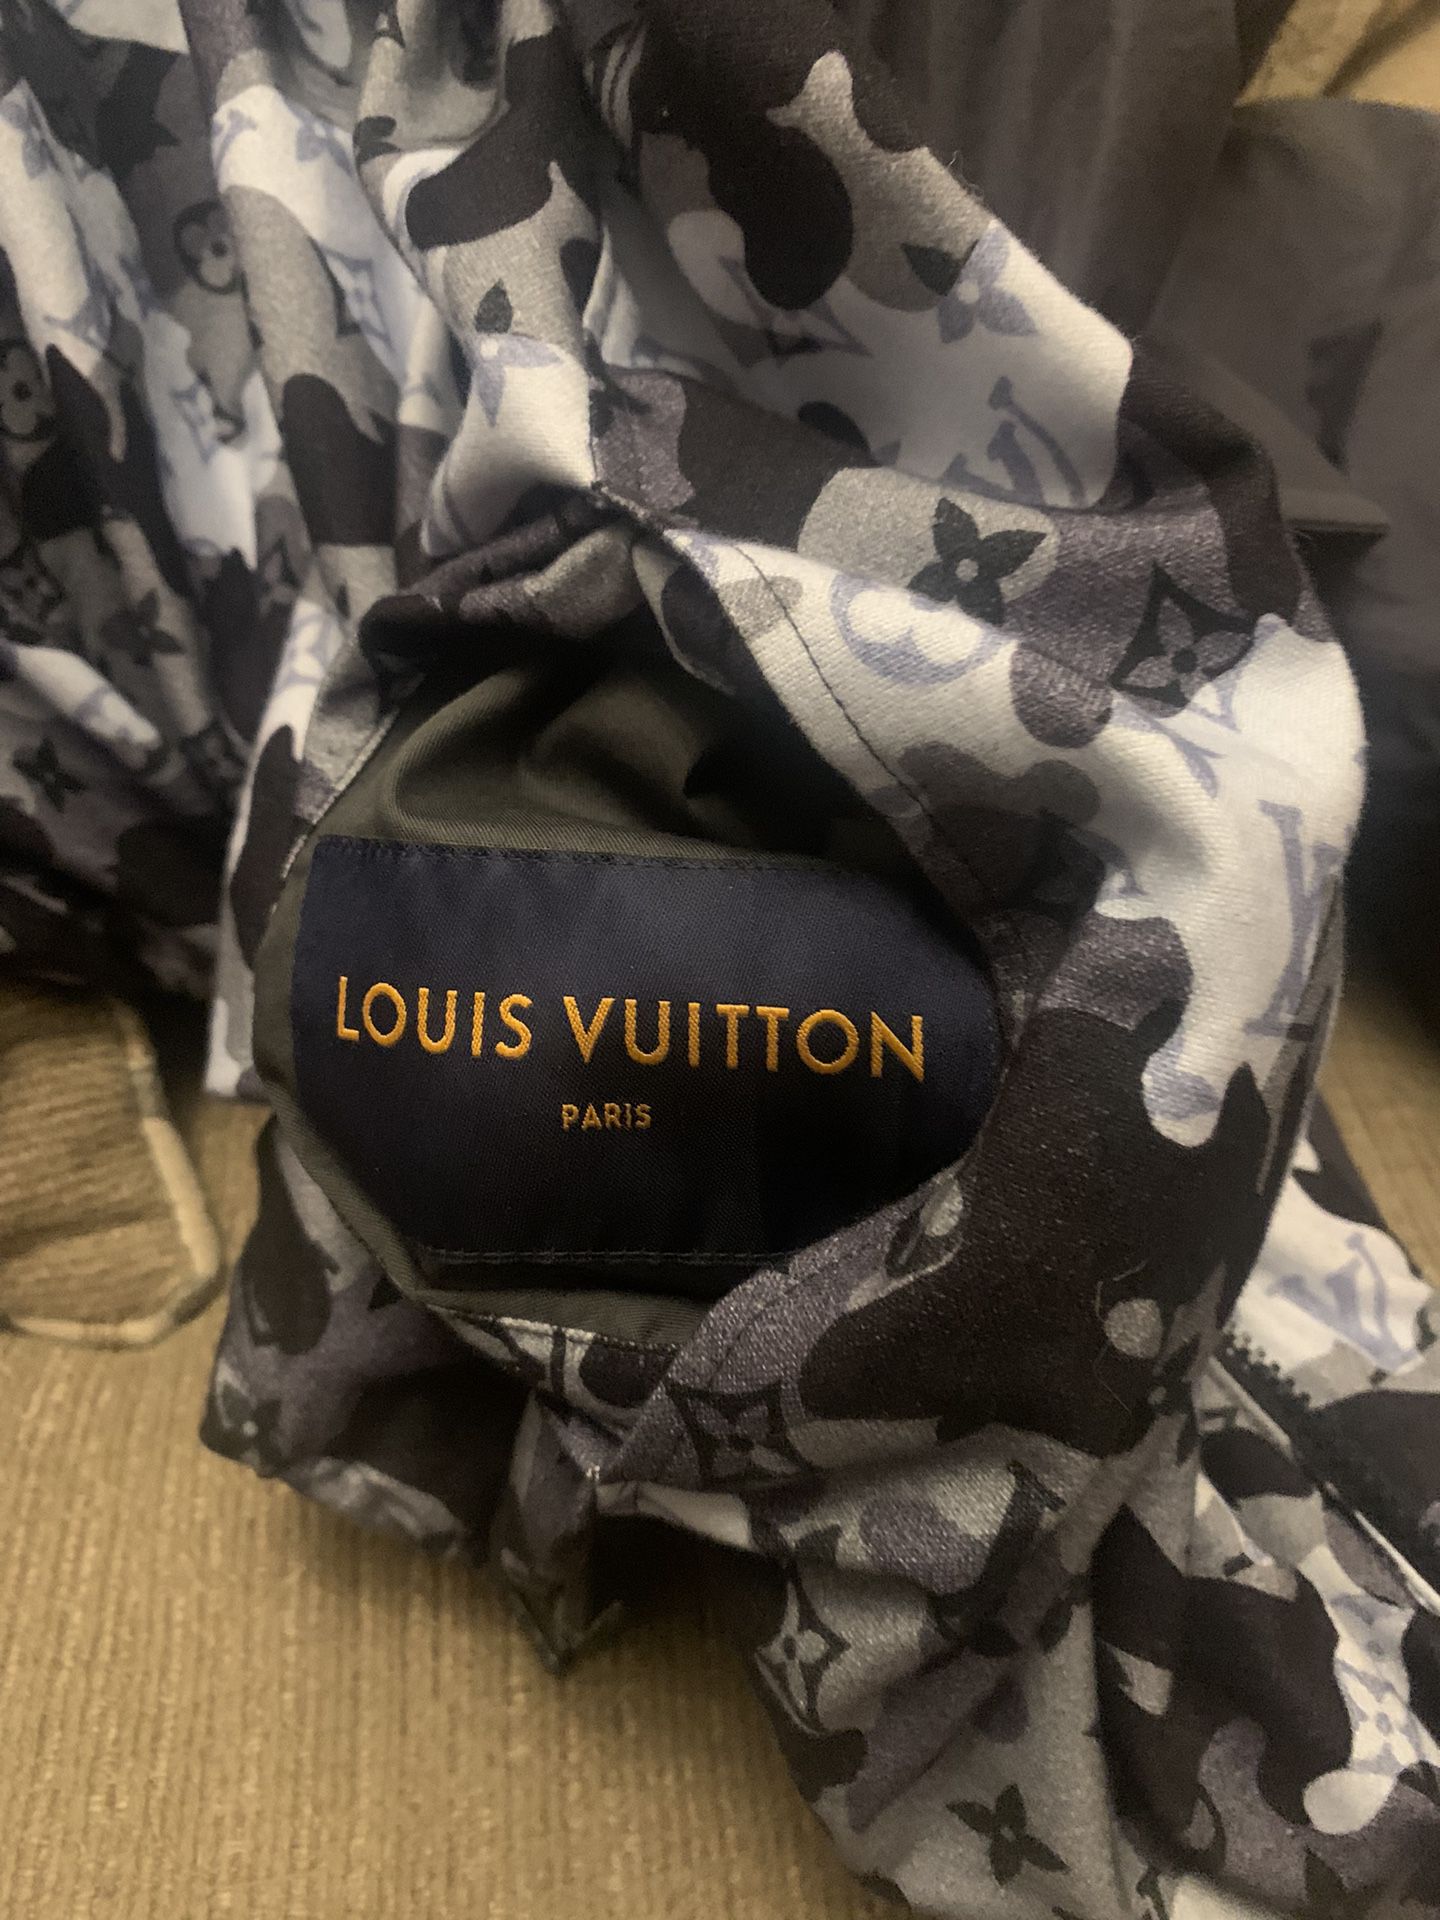 Louis Vuitton x Supreme Camo Jacket for Sale in Uppr Marlboro, MD - OfferUp